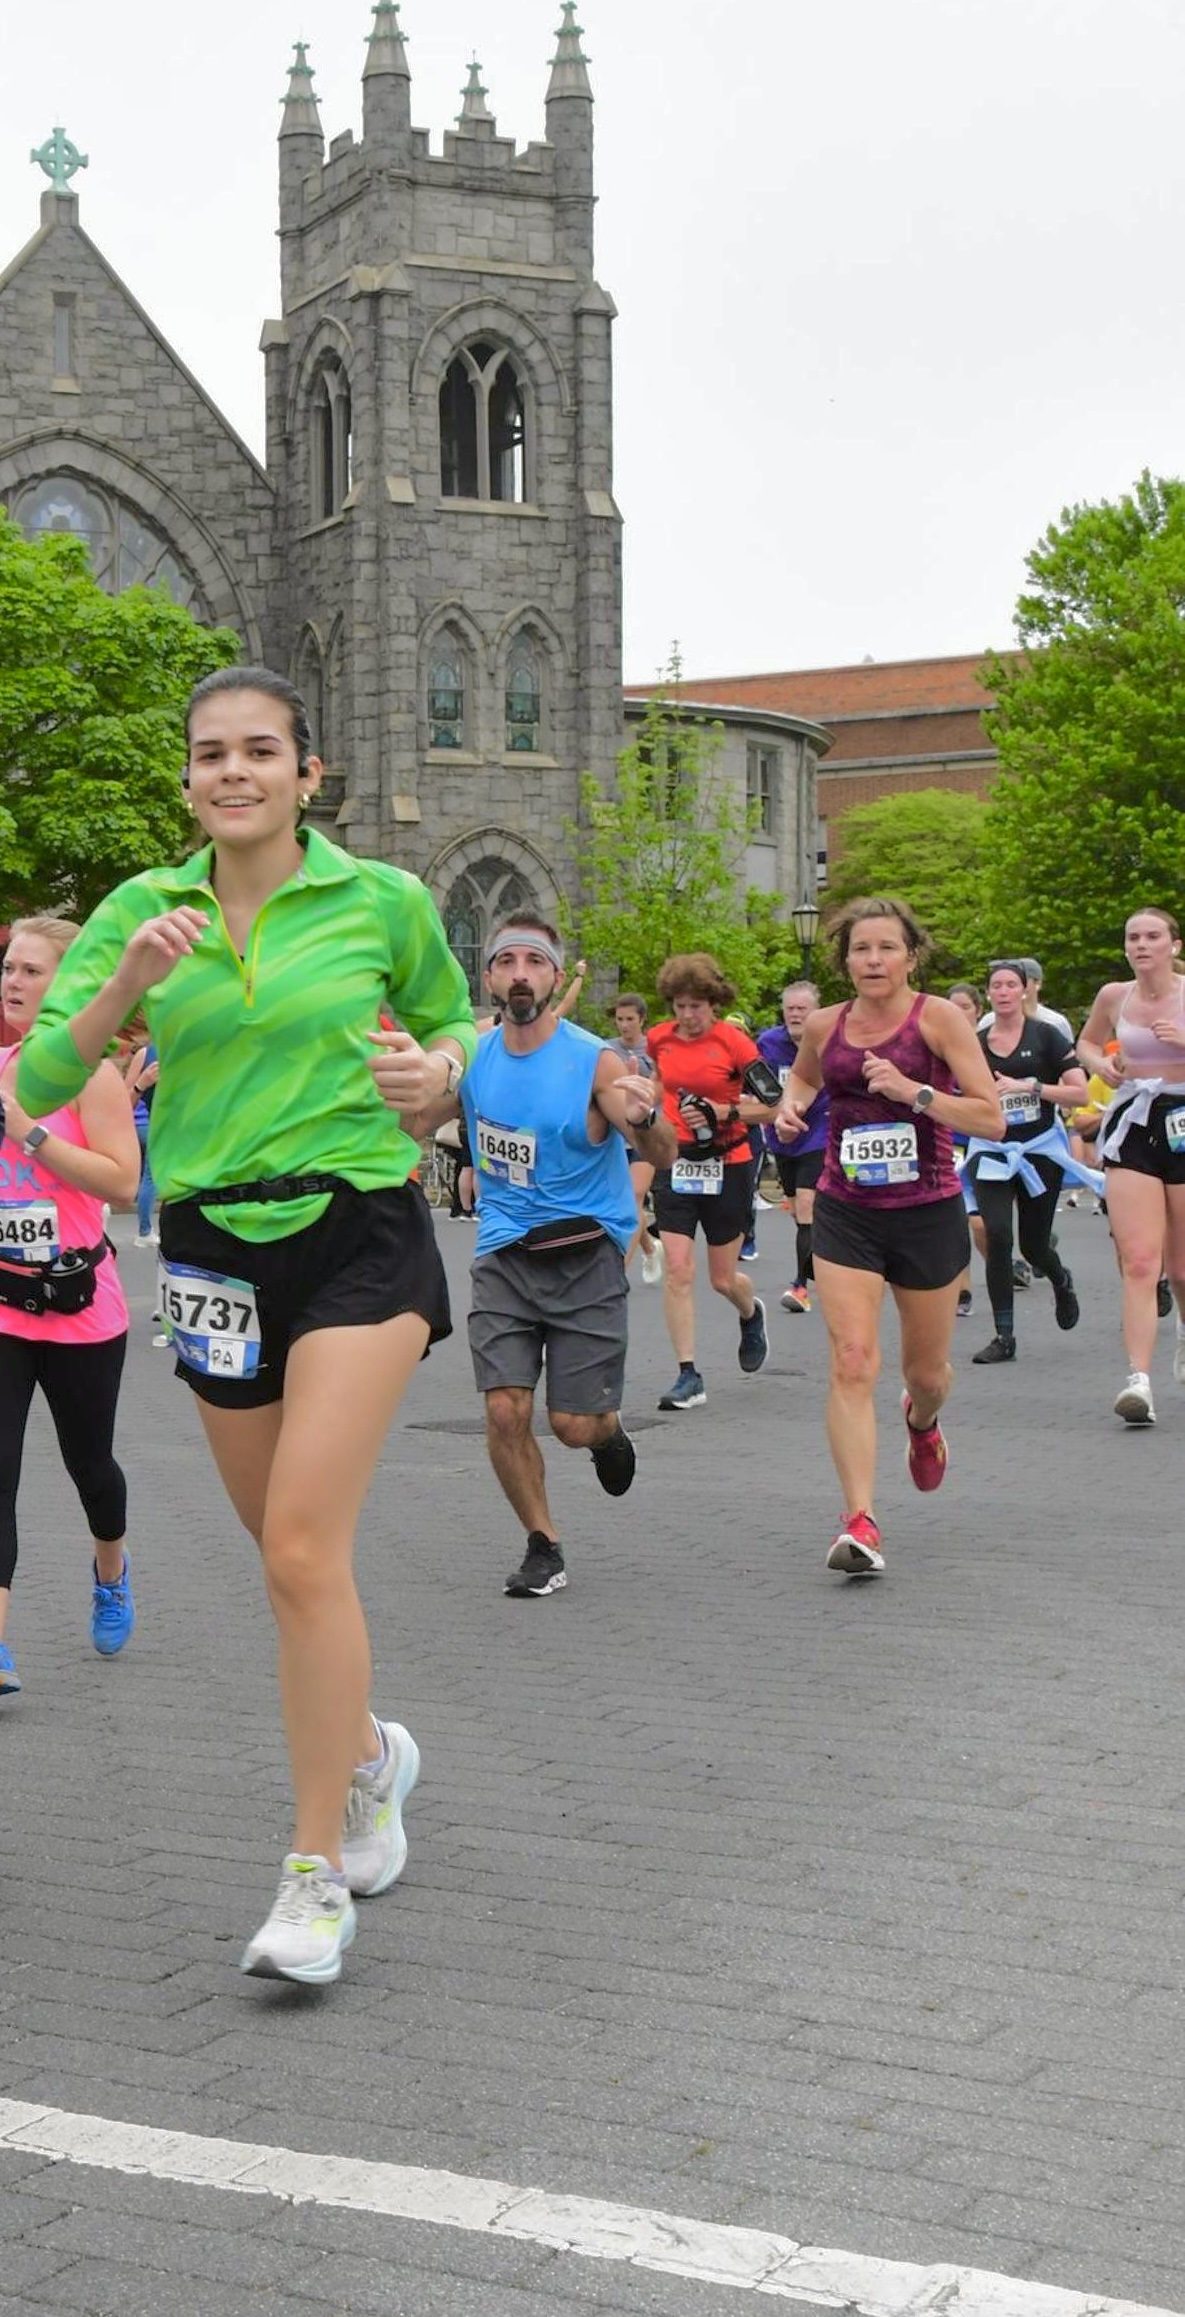  Mariana Fernandes Gragnani ran a half marathon with no prior training. 